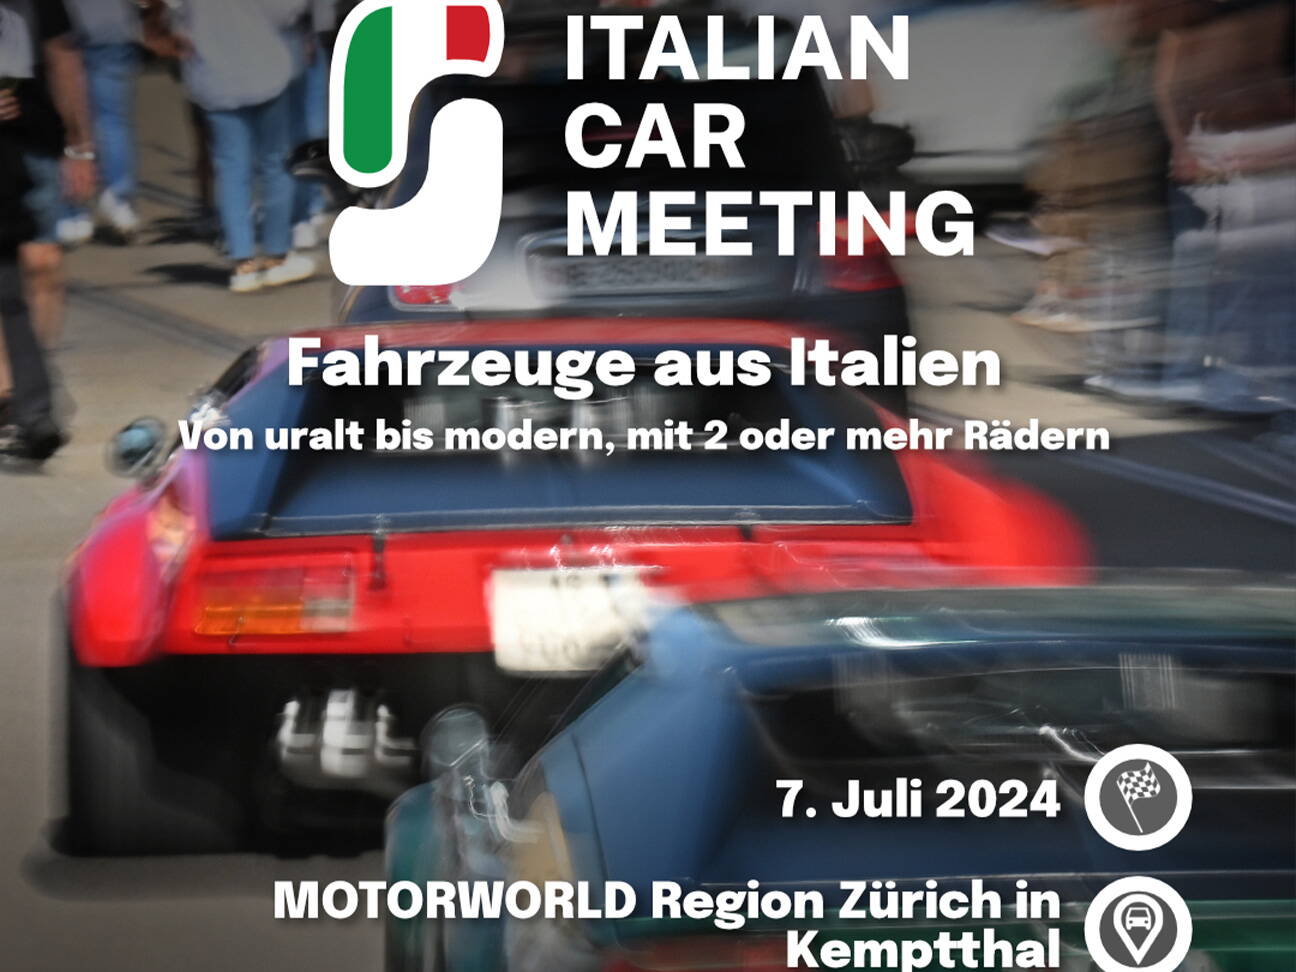 The Valley_Italian car meeting